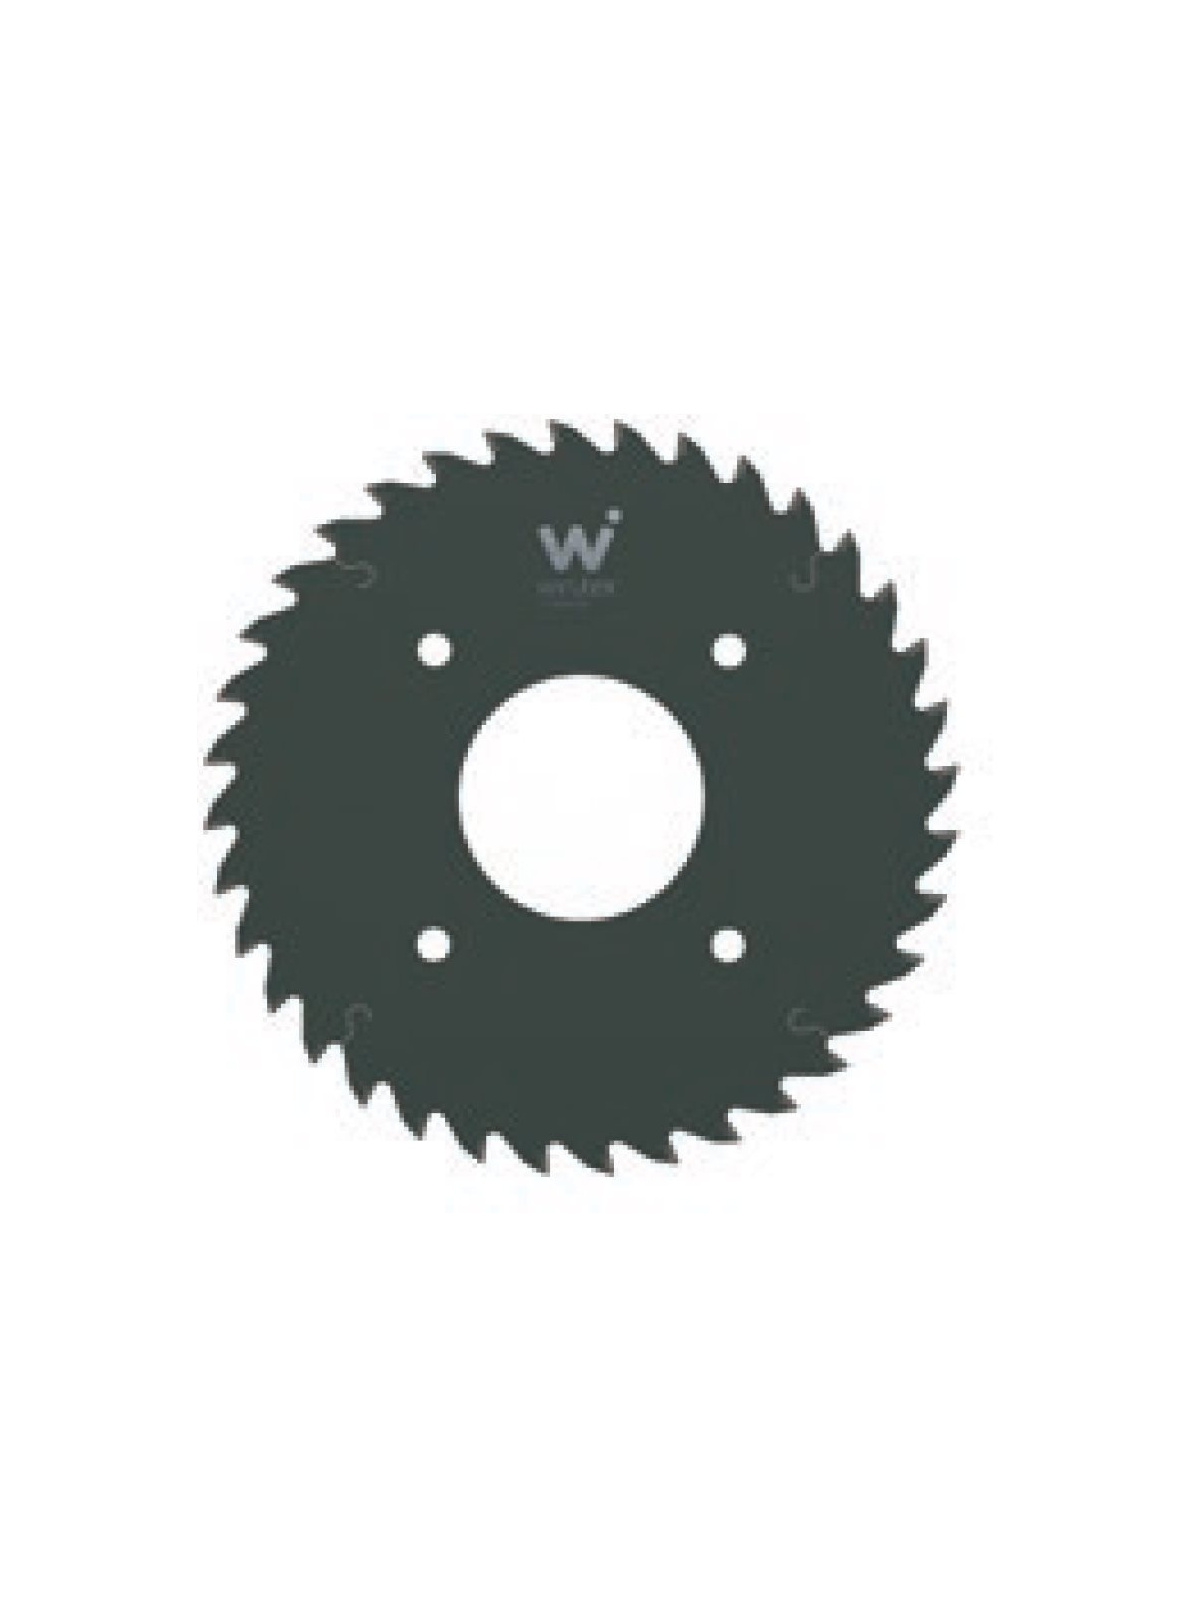 Wirutex Adjustable Scoring saw blade HM for Biesse Selco D200mm d65mm | JVL-Europe